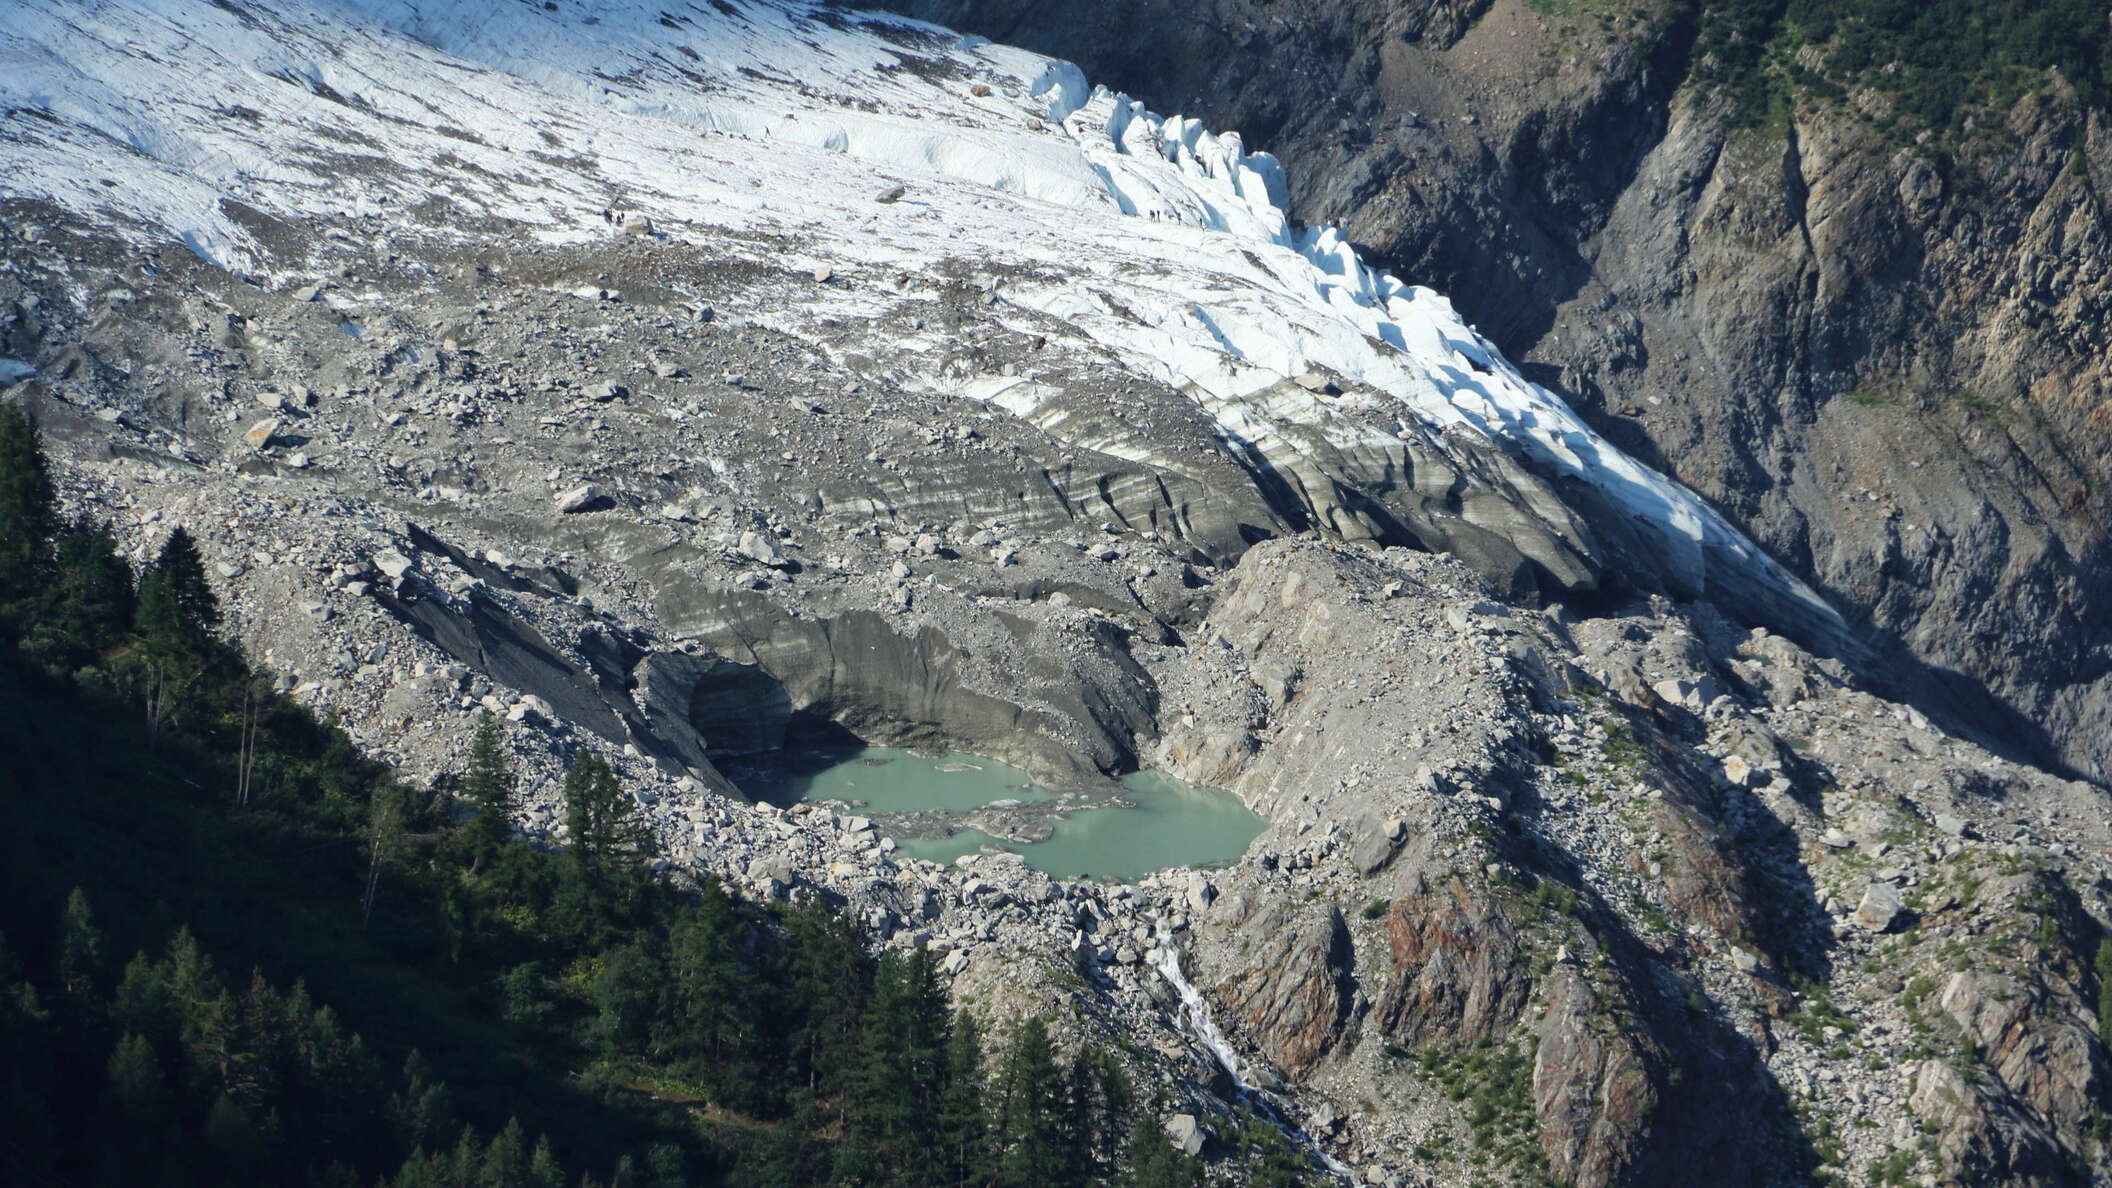 Mont Blanc | Glacier des Bossons with proglacial lake